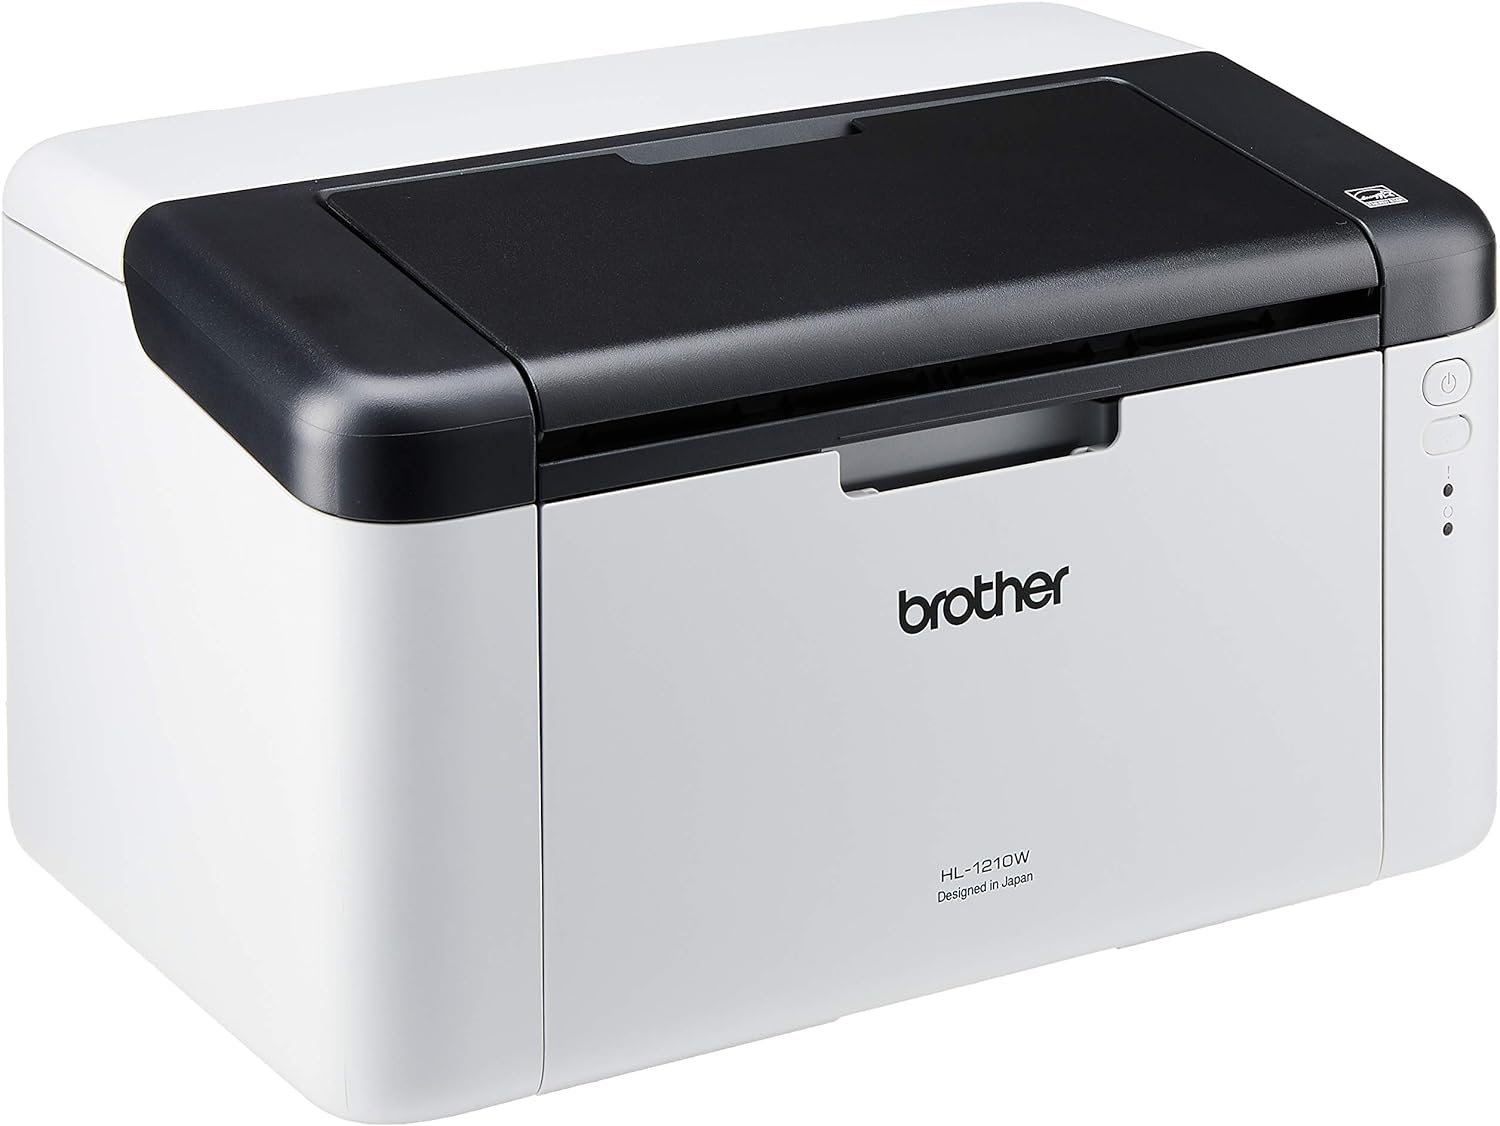 Brother HL-1210W Mono Laser A4 Wireless Printer